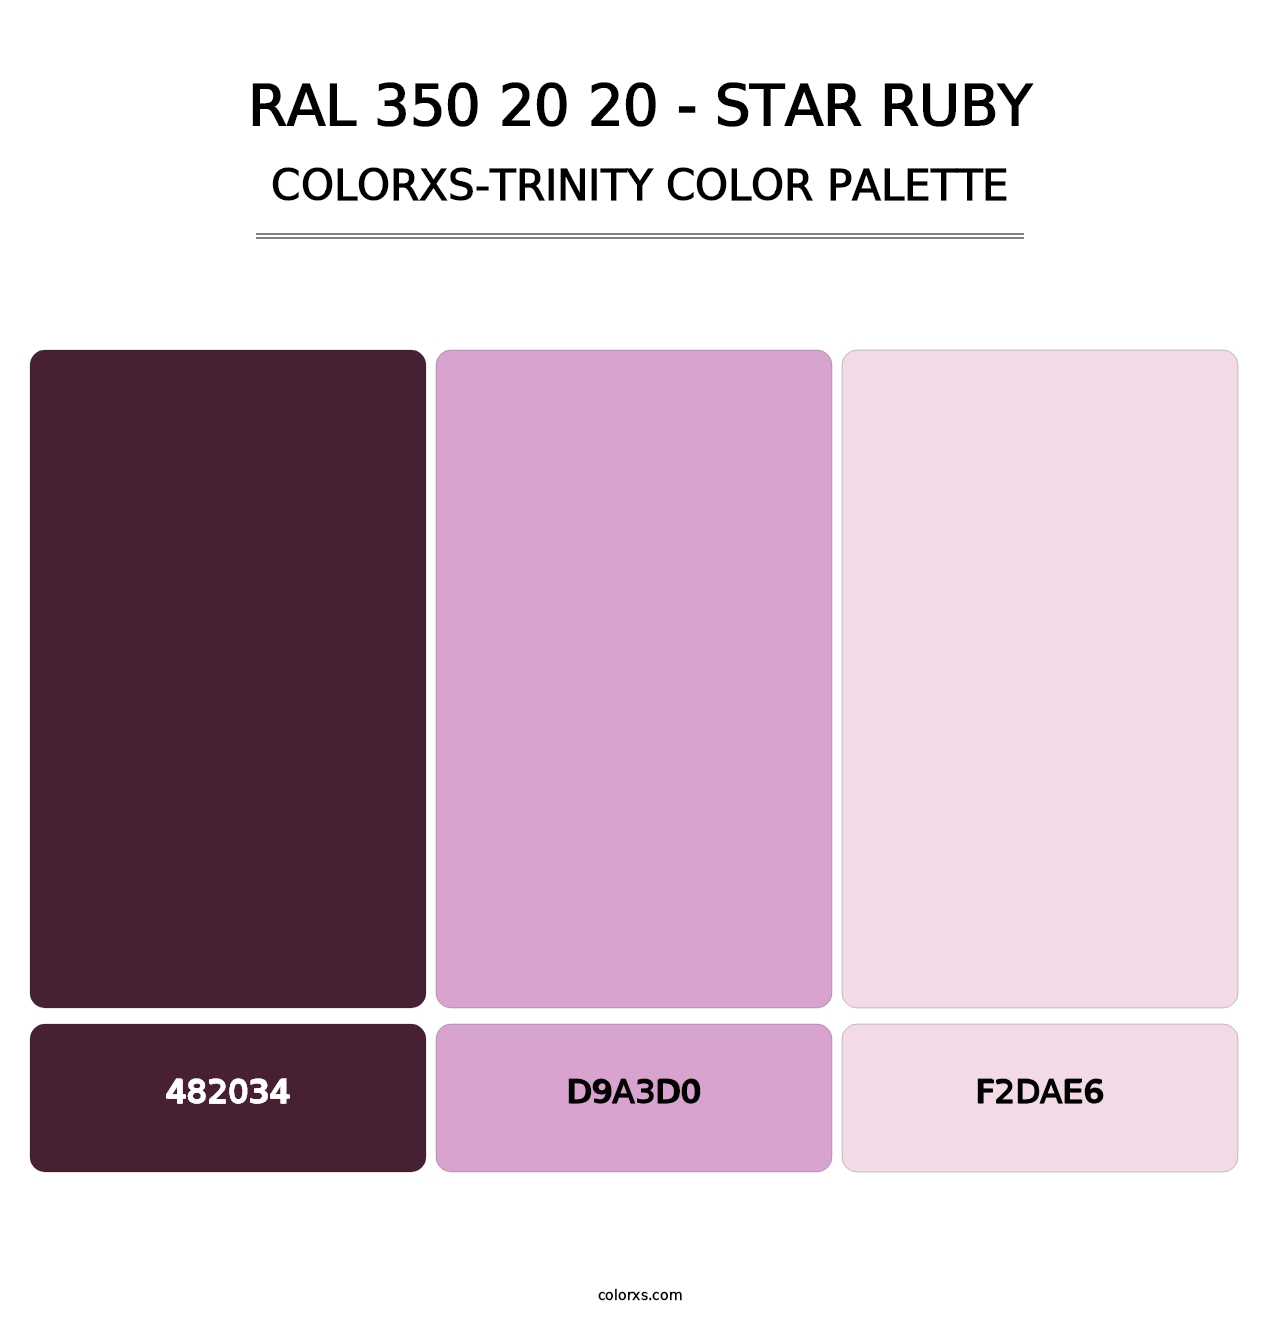 RAL 350 20 20 - Star Ruby - Colorxs Trinity Palette